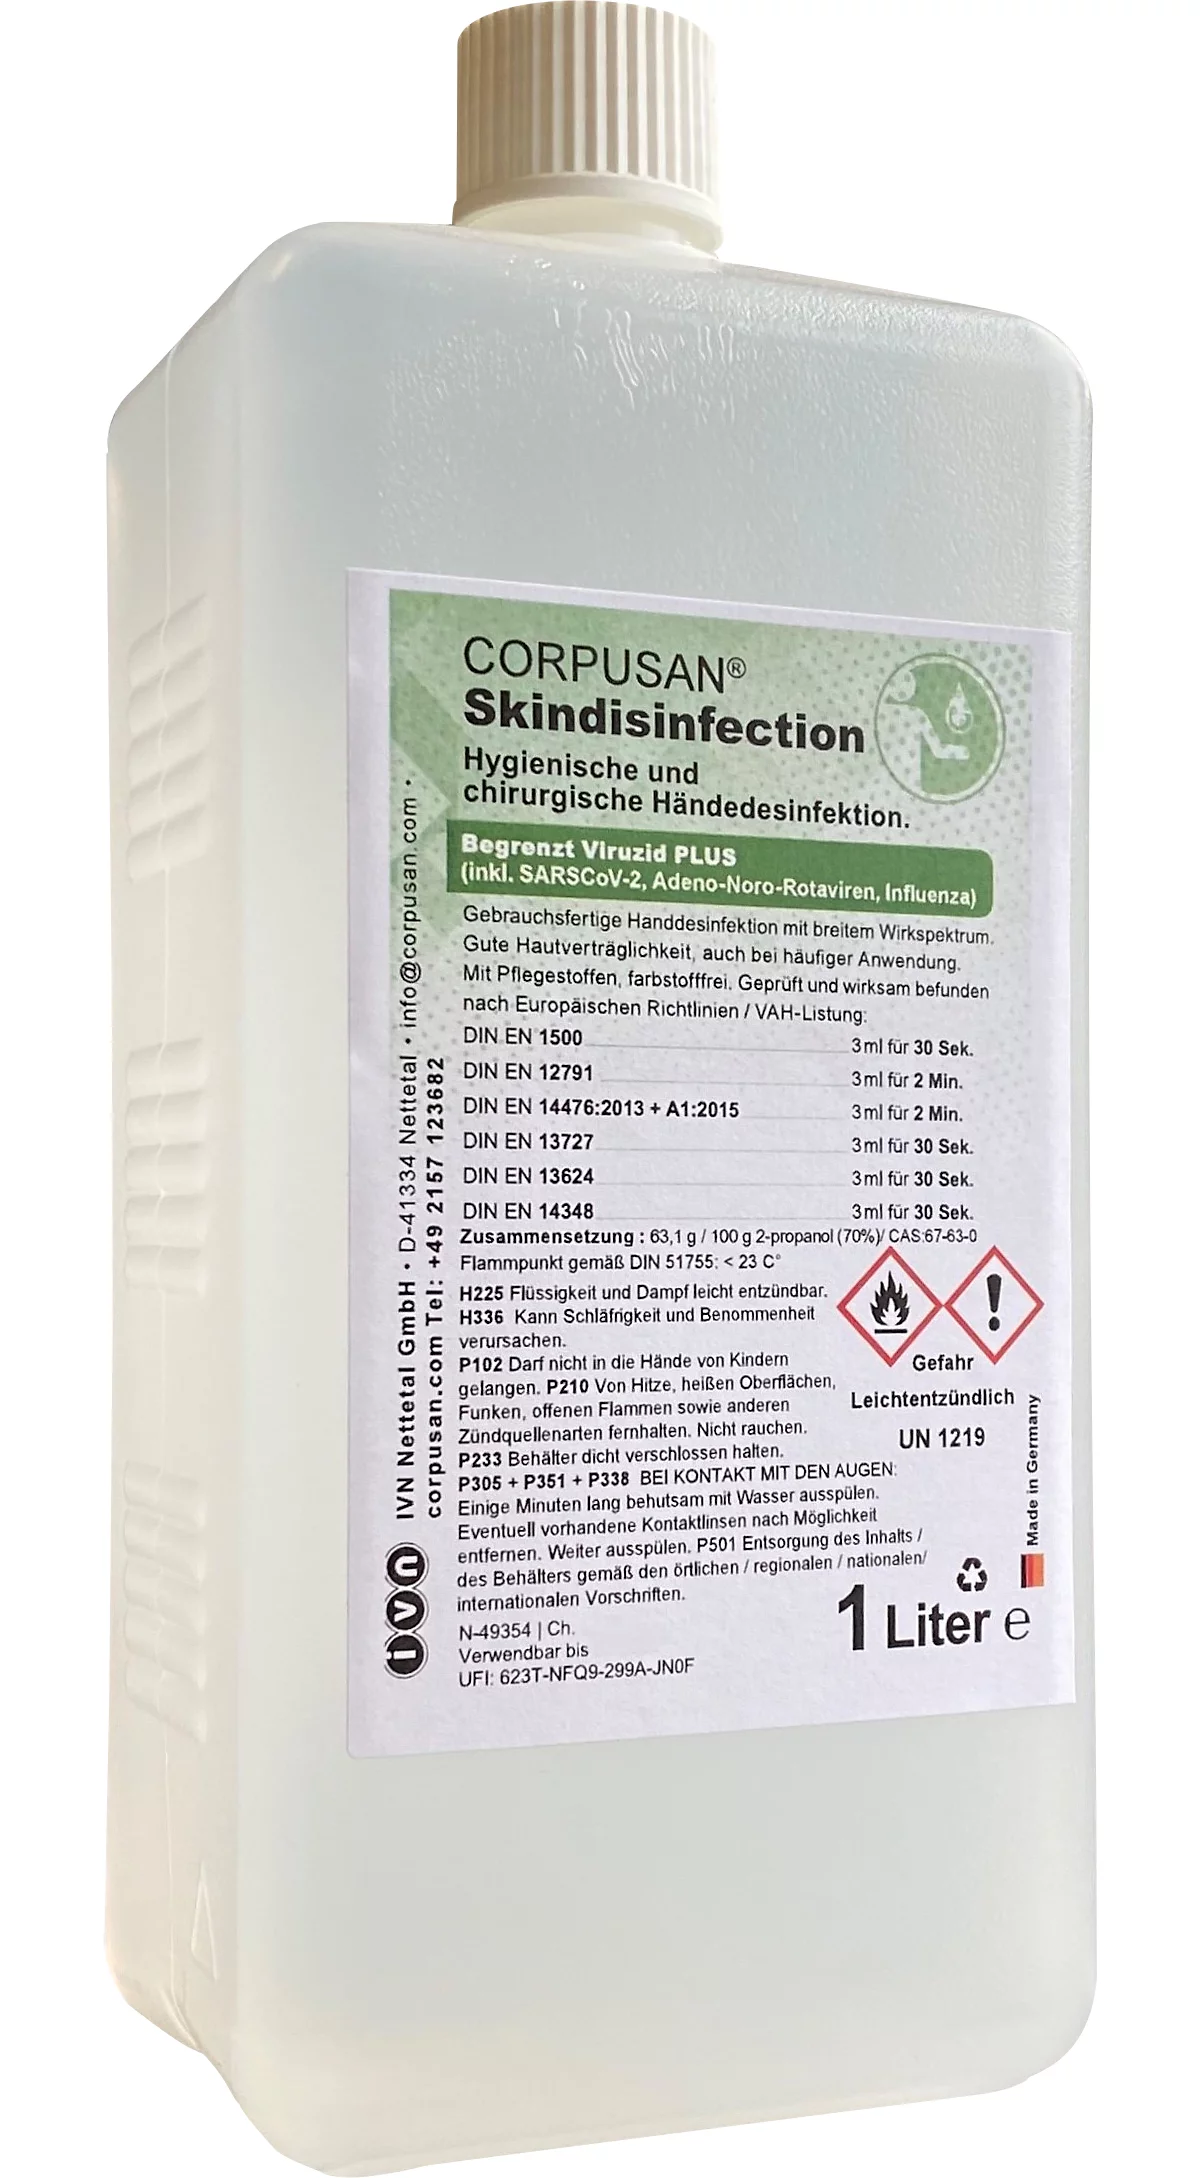 Hautdesinfektionsmittel CORPUSAN® Skindisinfection, bakterizid, levurozid, begrenzt viruzid, farblos, 10 x 1 Liter